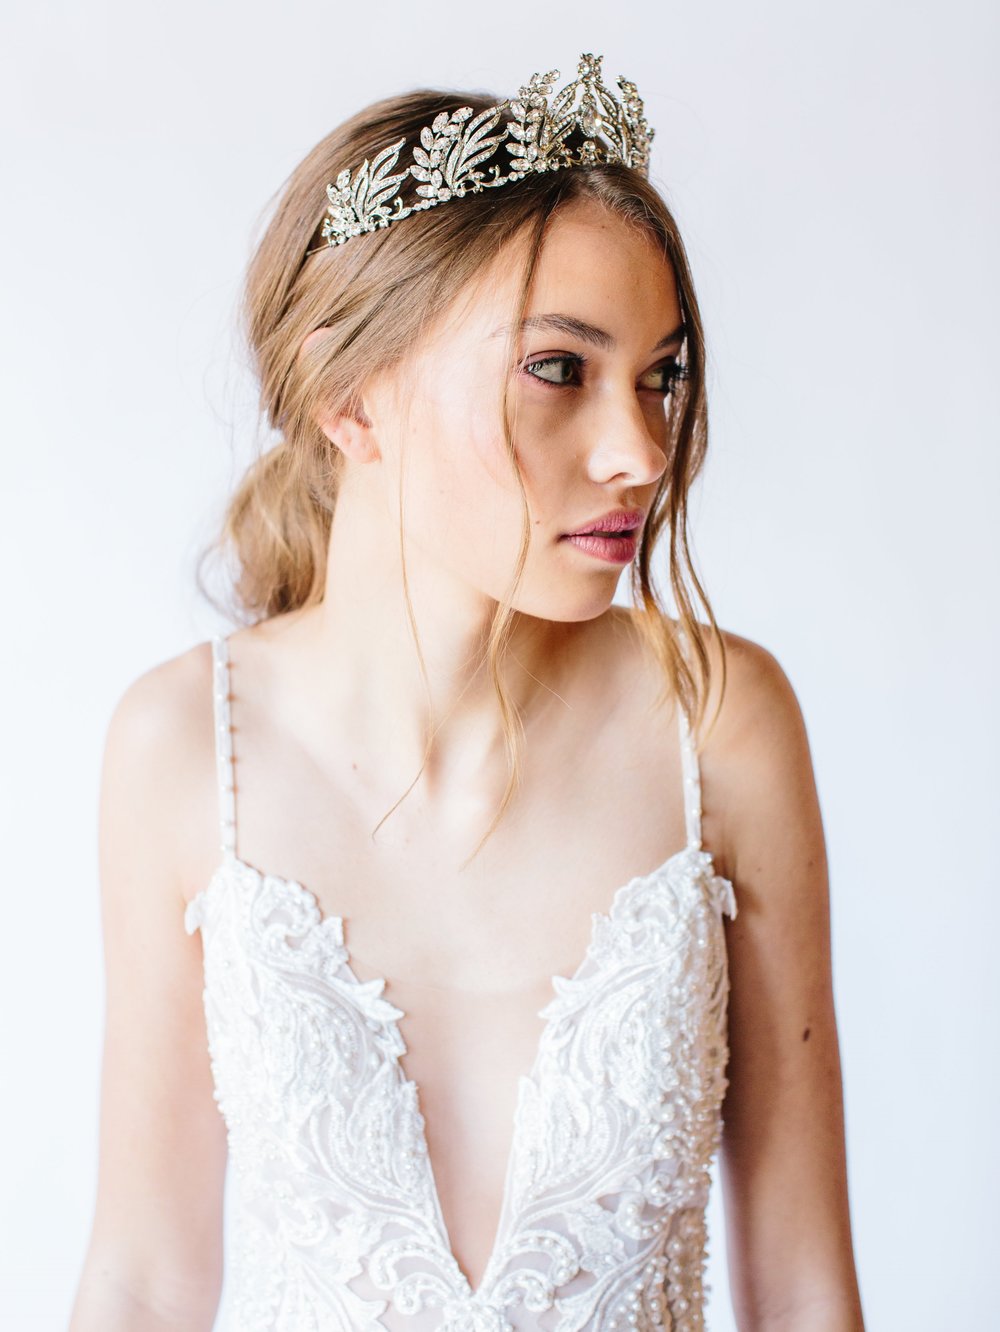 How to wear a wedding tiara